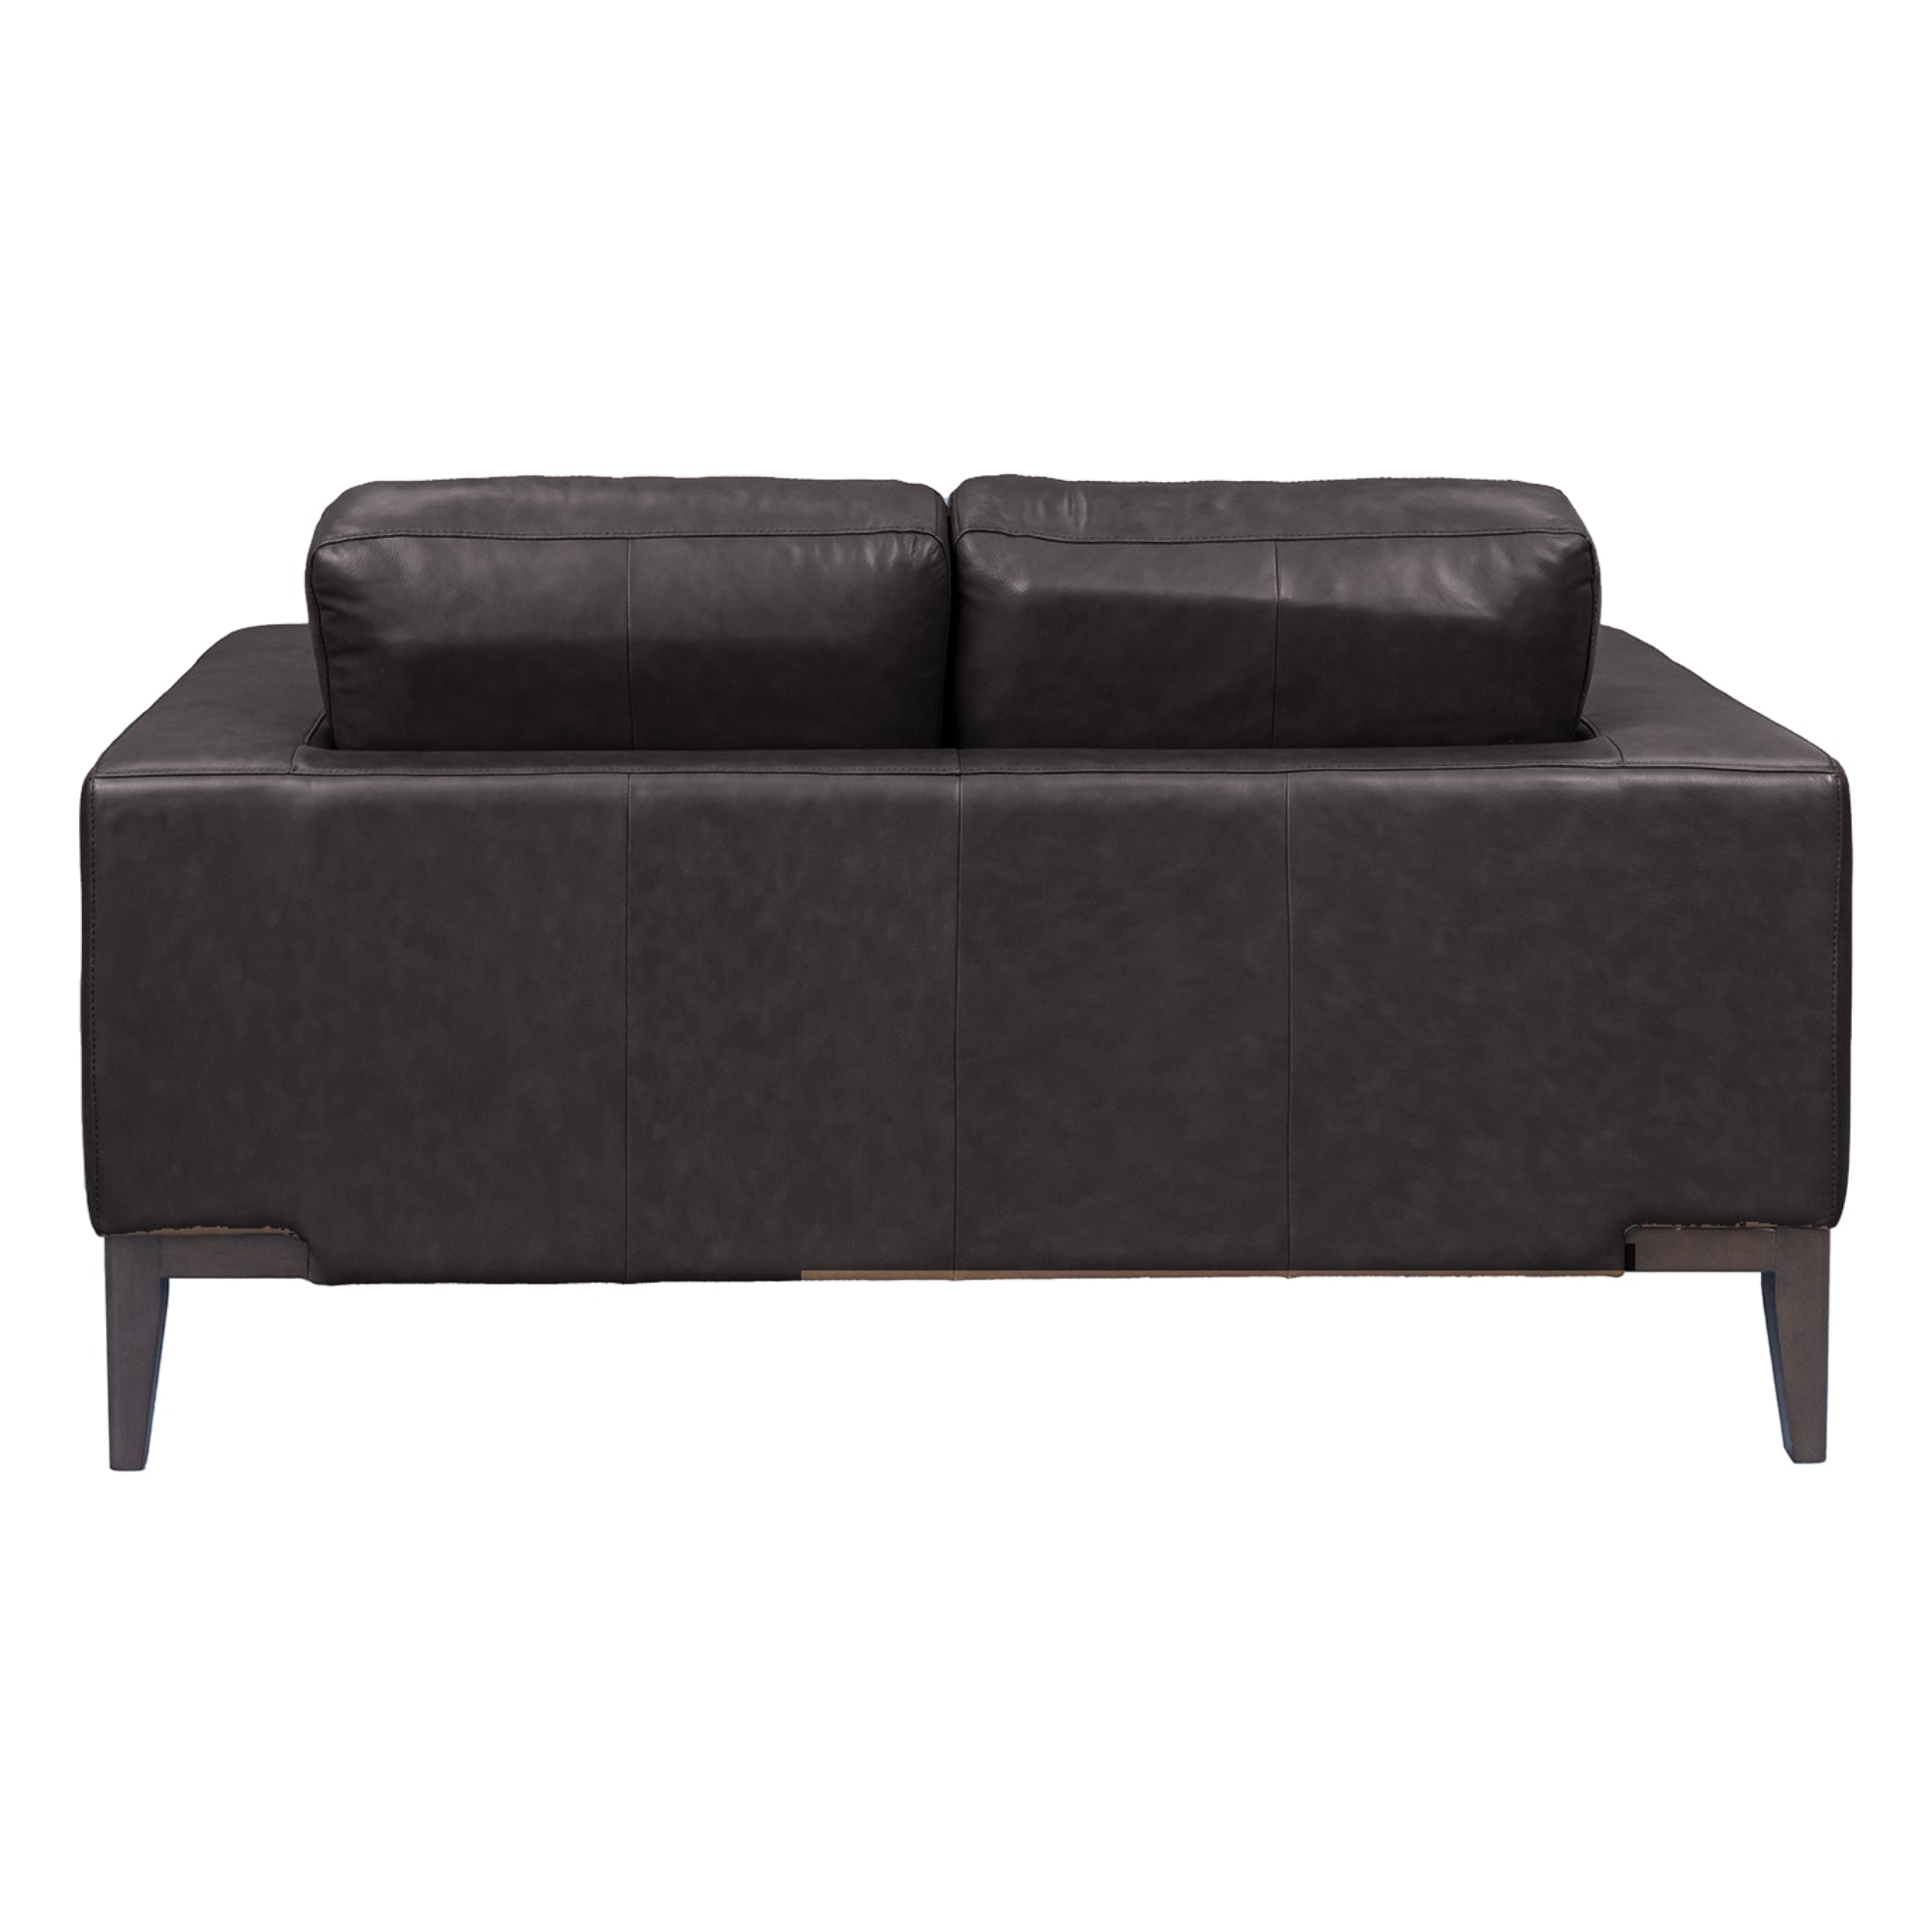 Modern 2-Seater Leather Sofa, Wide Arms, Brown Legs - Lorenzo